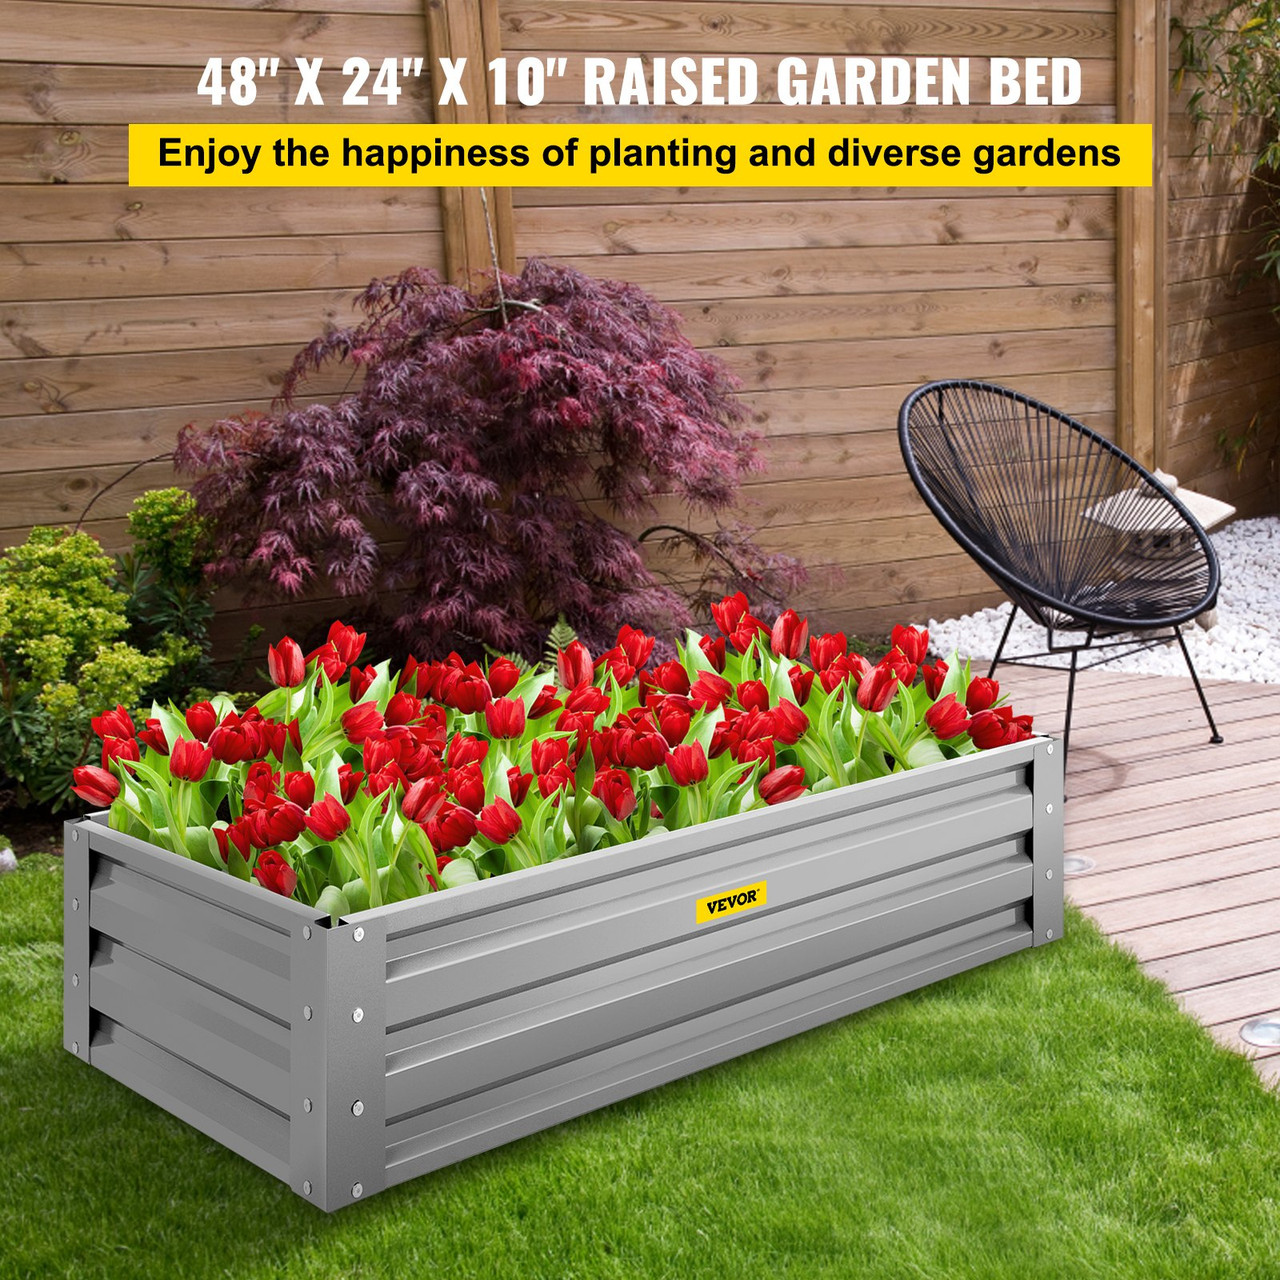 Galvanized Raised Garden Bed, 48" x 24" x 10" Metal Planter Box, Light Gray Steel Plant Raised Garden Bed Kit, Planter Boxes Outdoor